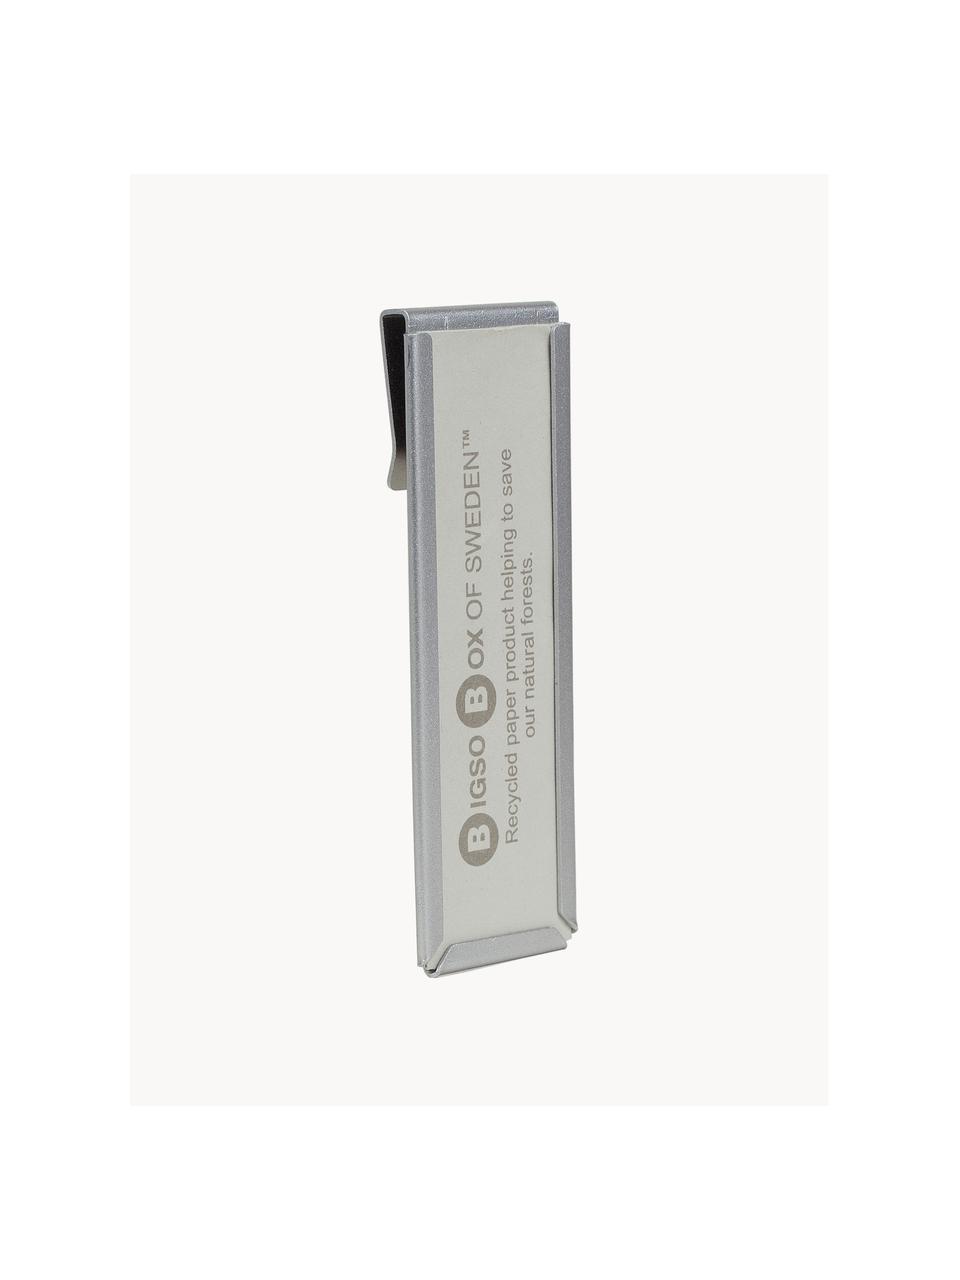 Vertikální držáky na štítky Clips Label, 4 ks, Potažený kov, Stříbrná, Š 2 cm, V 7 cm